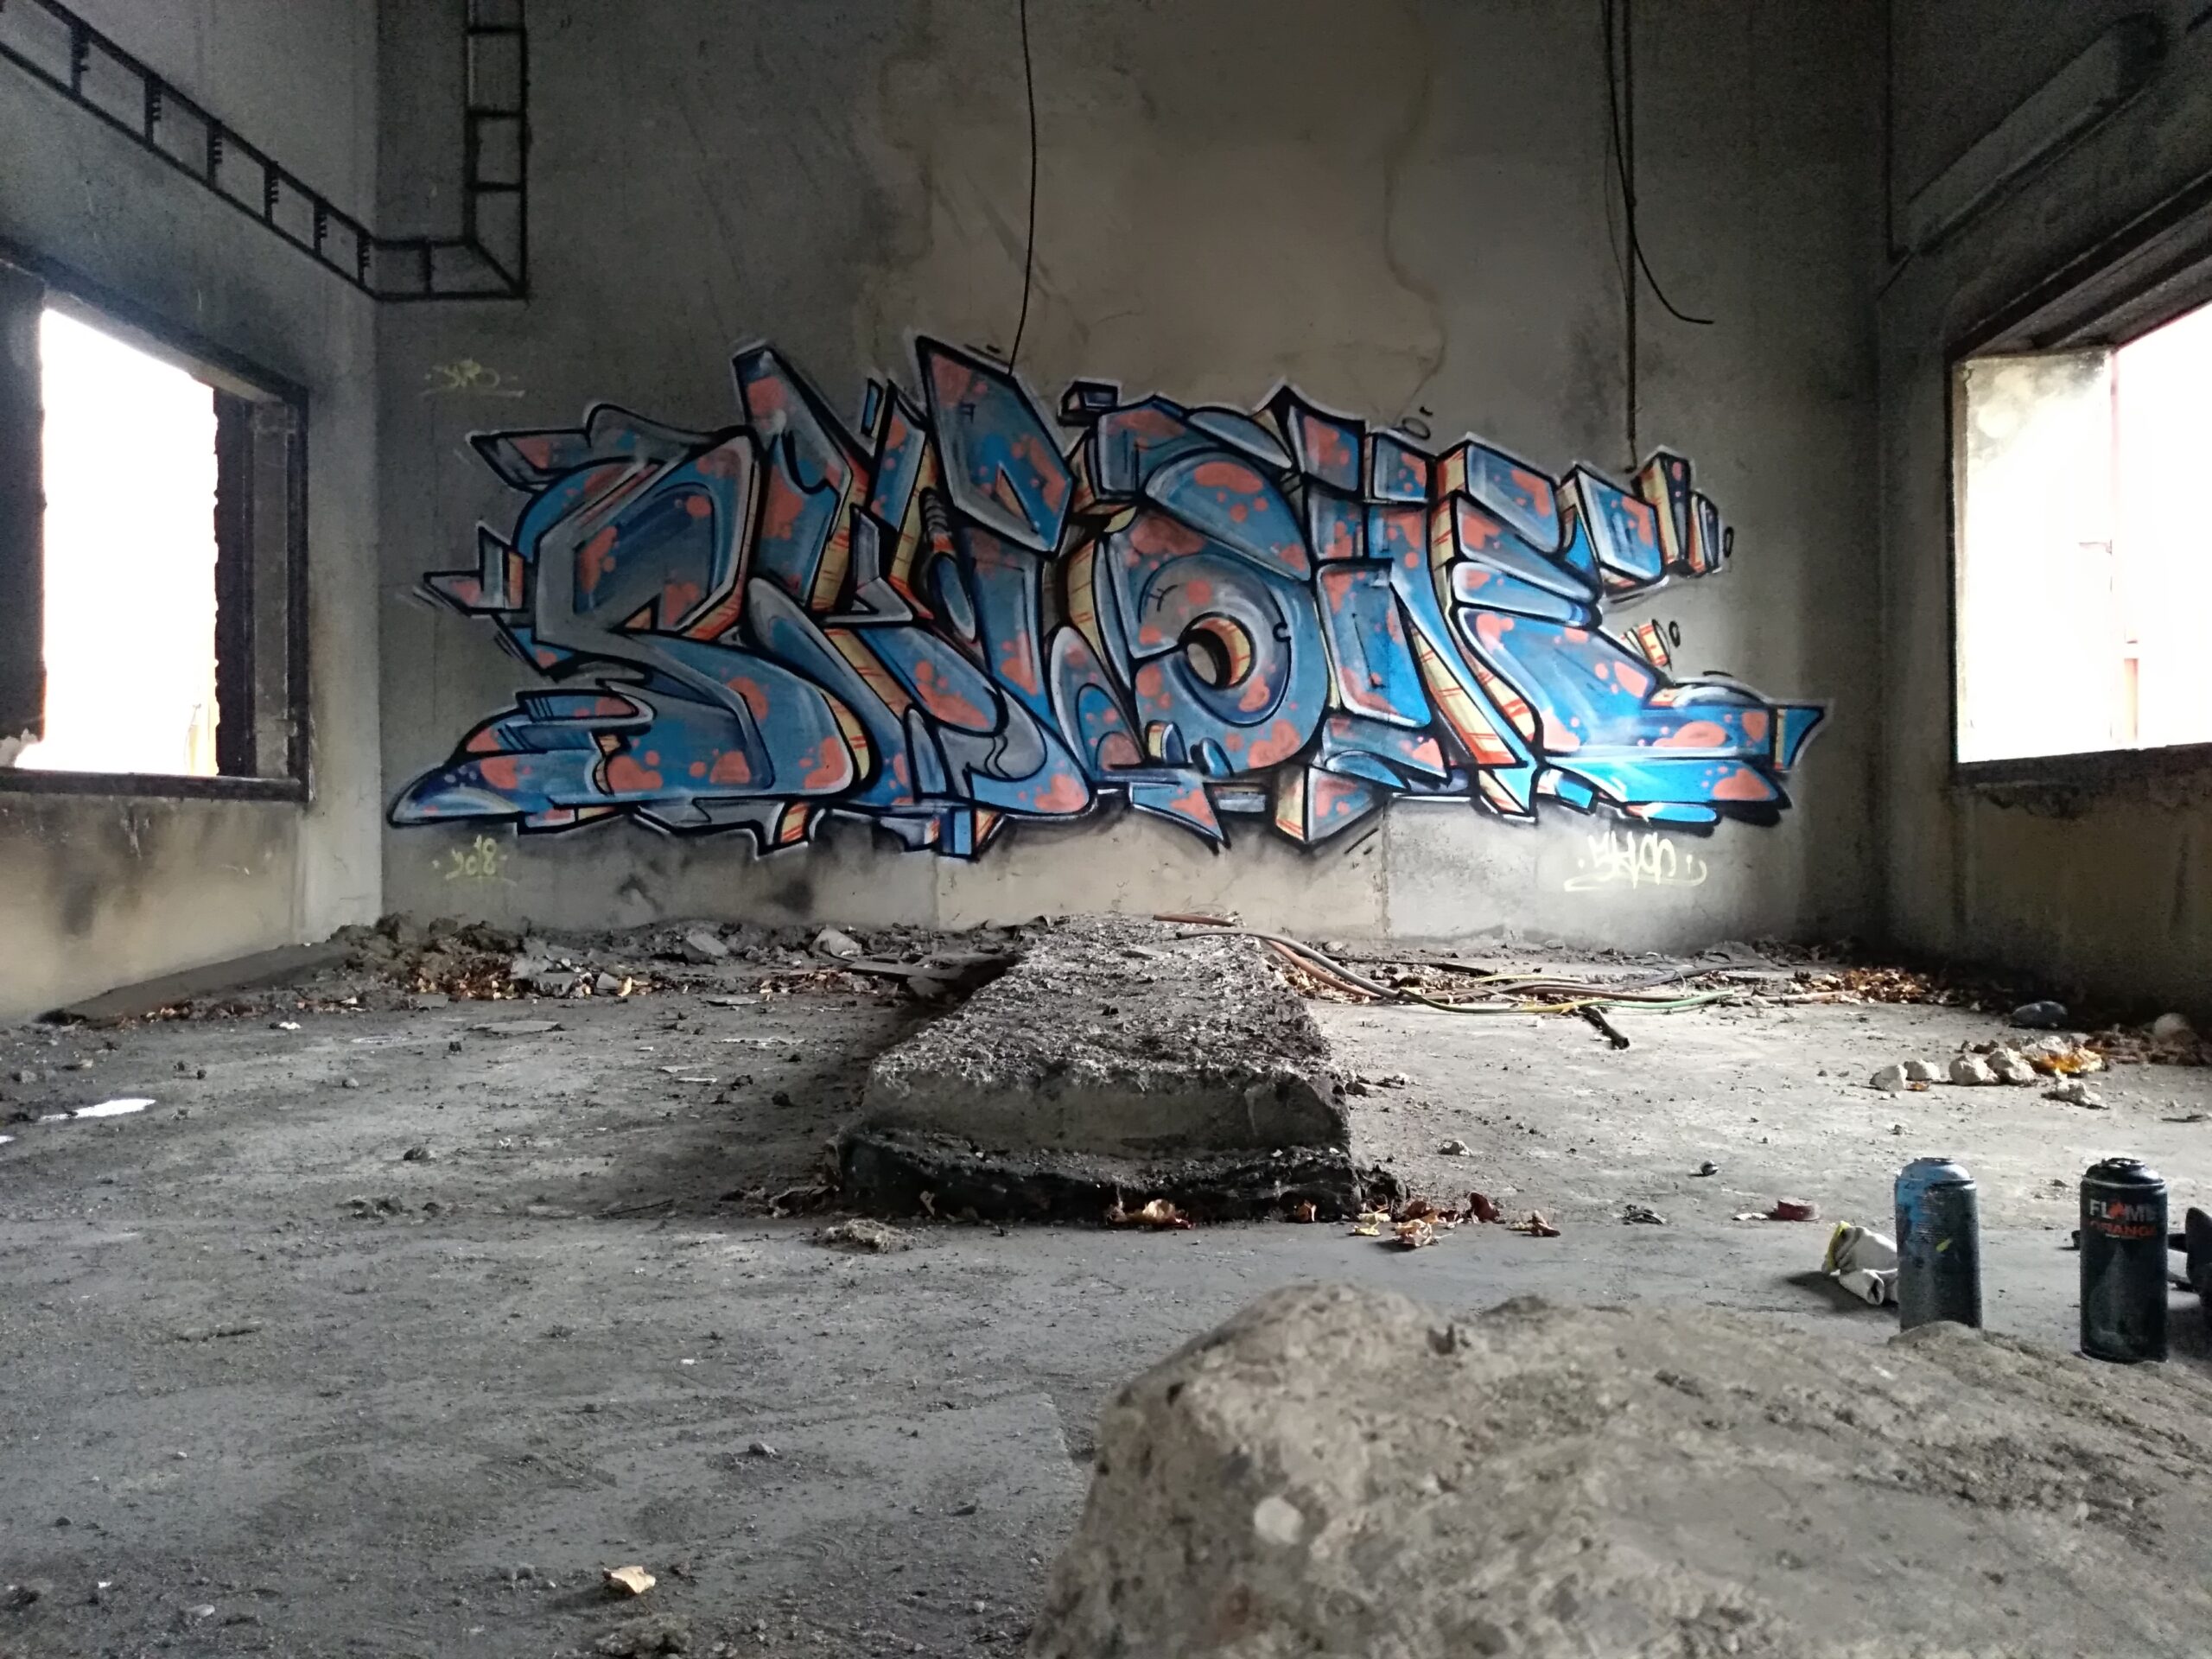 Sklon - Graffiti artist - umělecká skupina tlustá čára